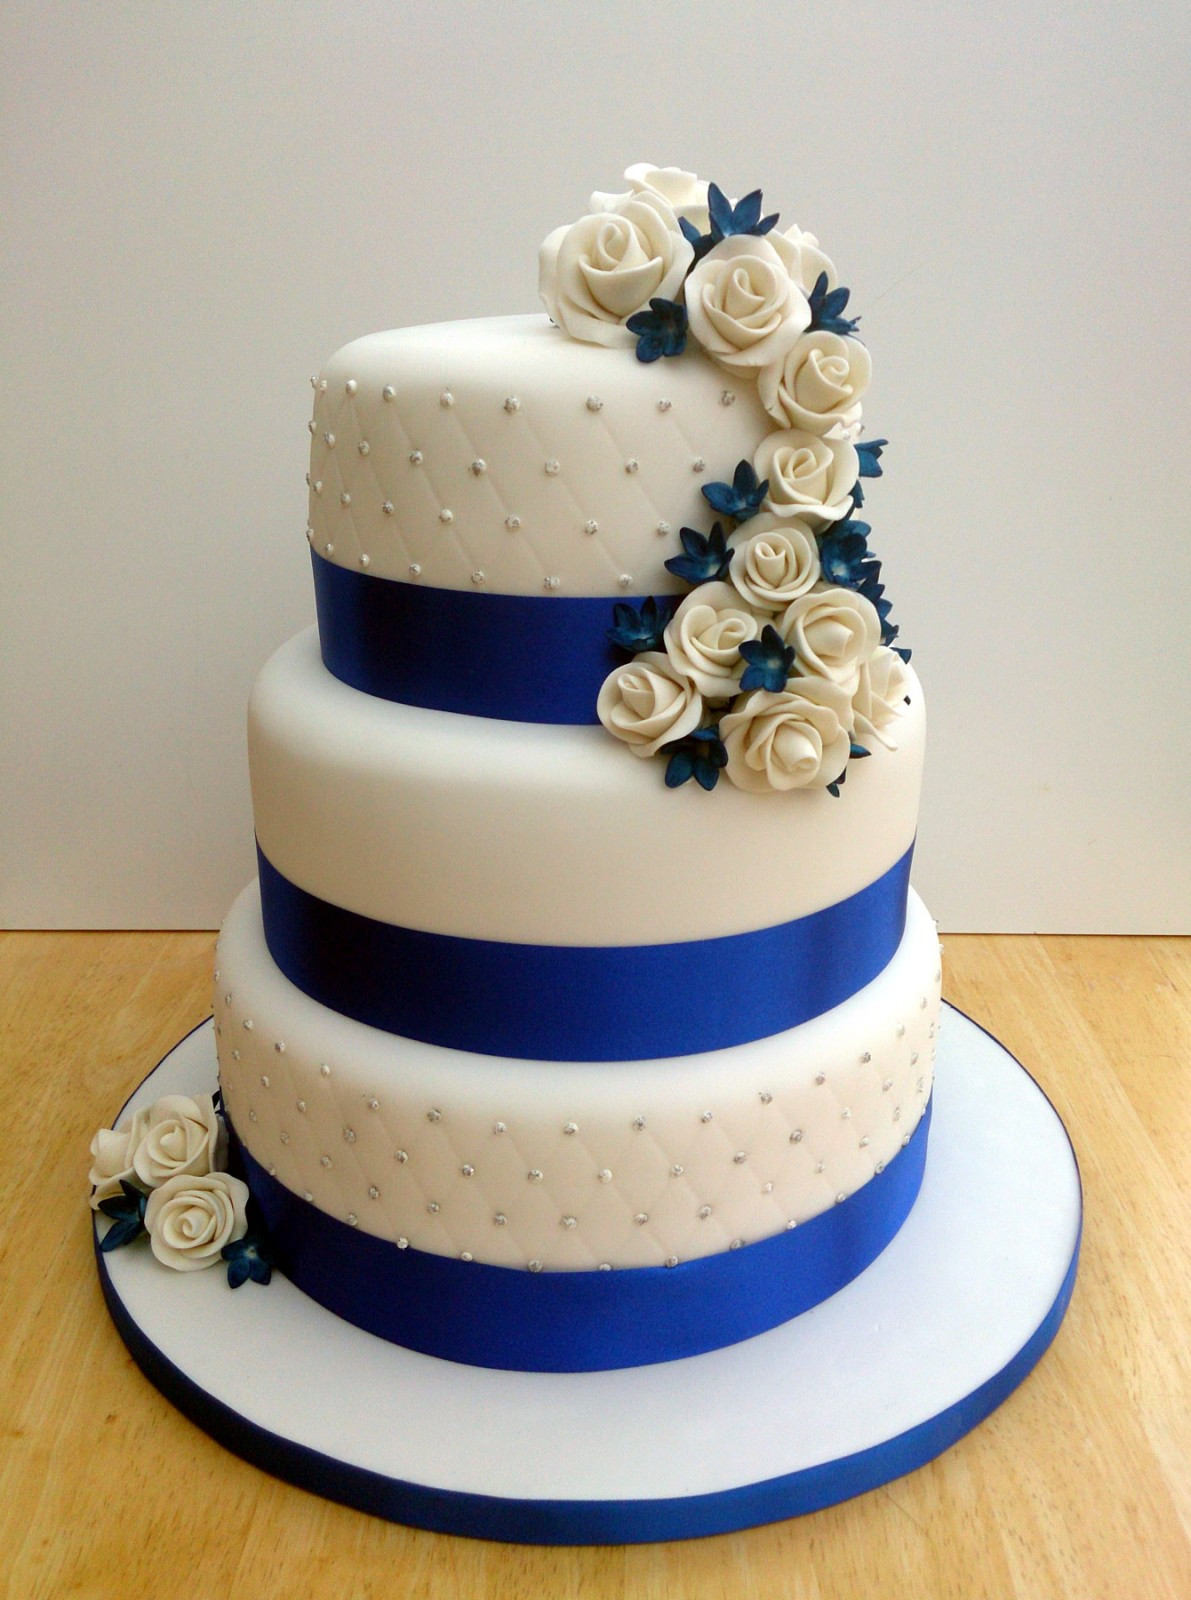 3 Tier Wedding Cakes Prices
 Price of 3 tier wedding cake idea in 2017